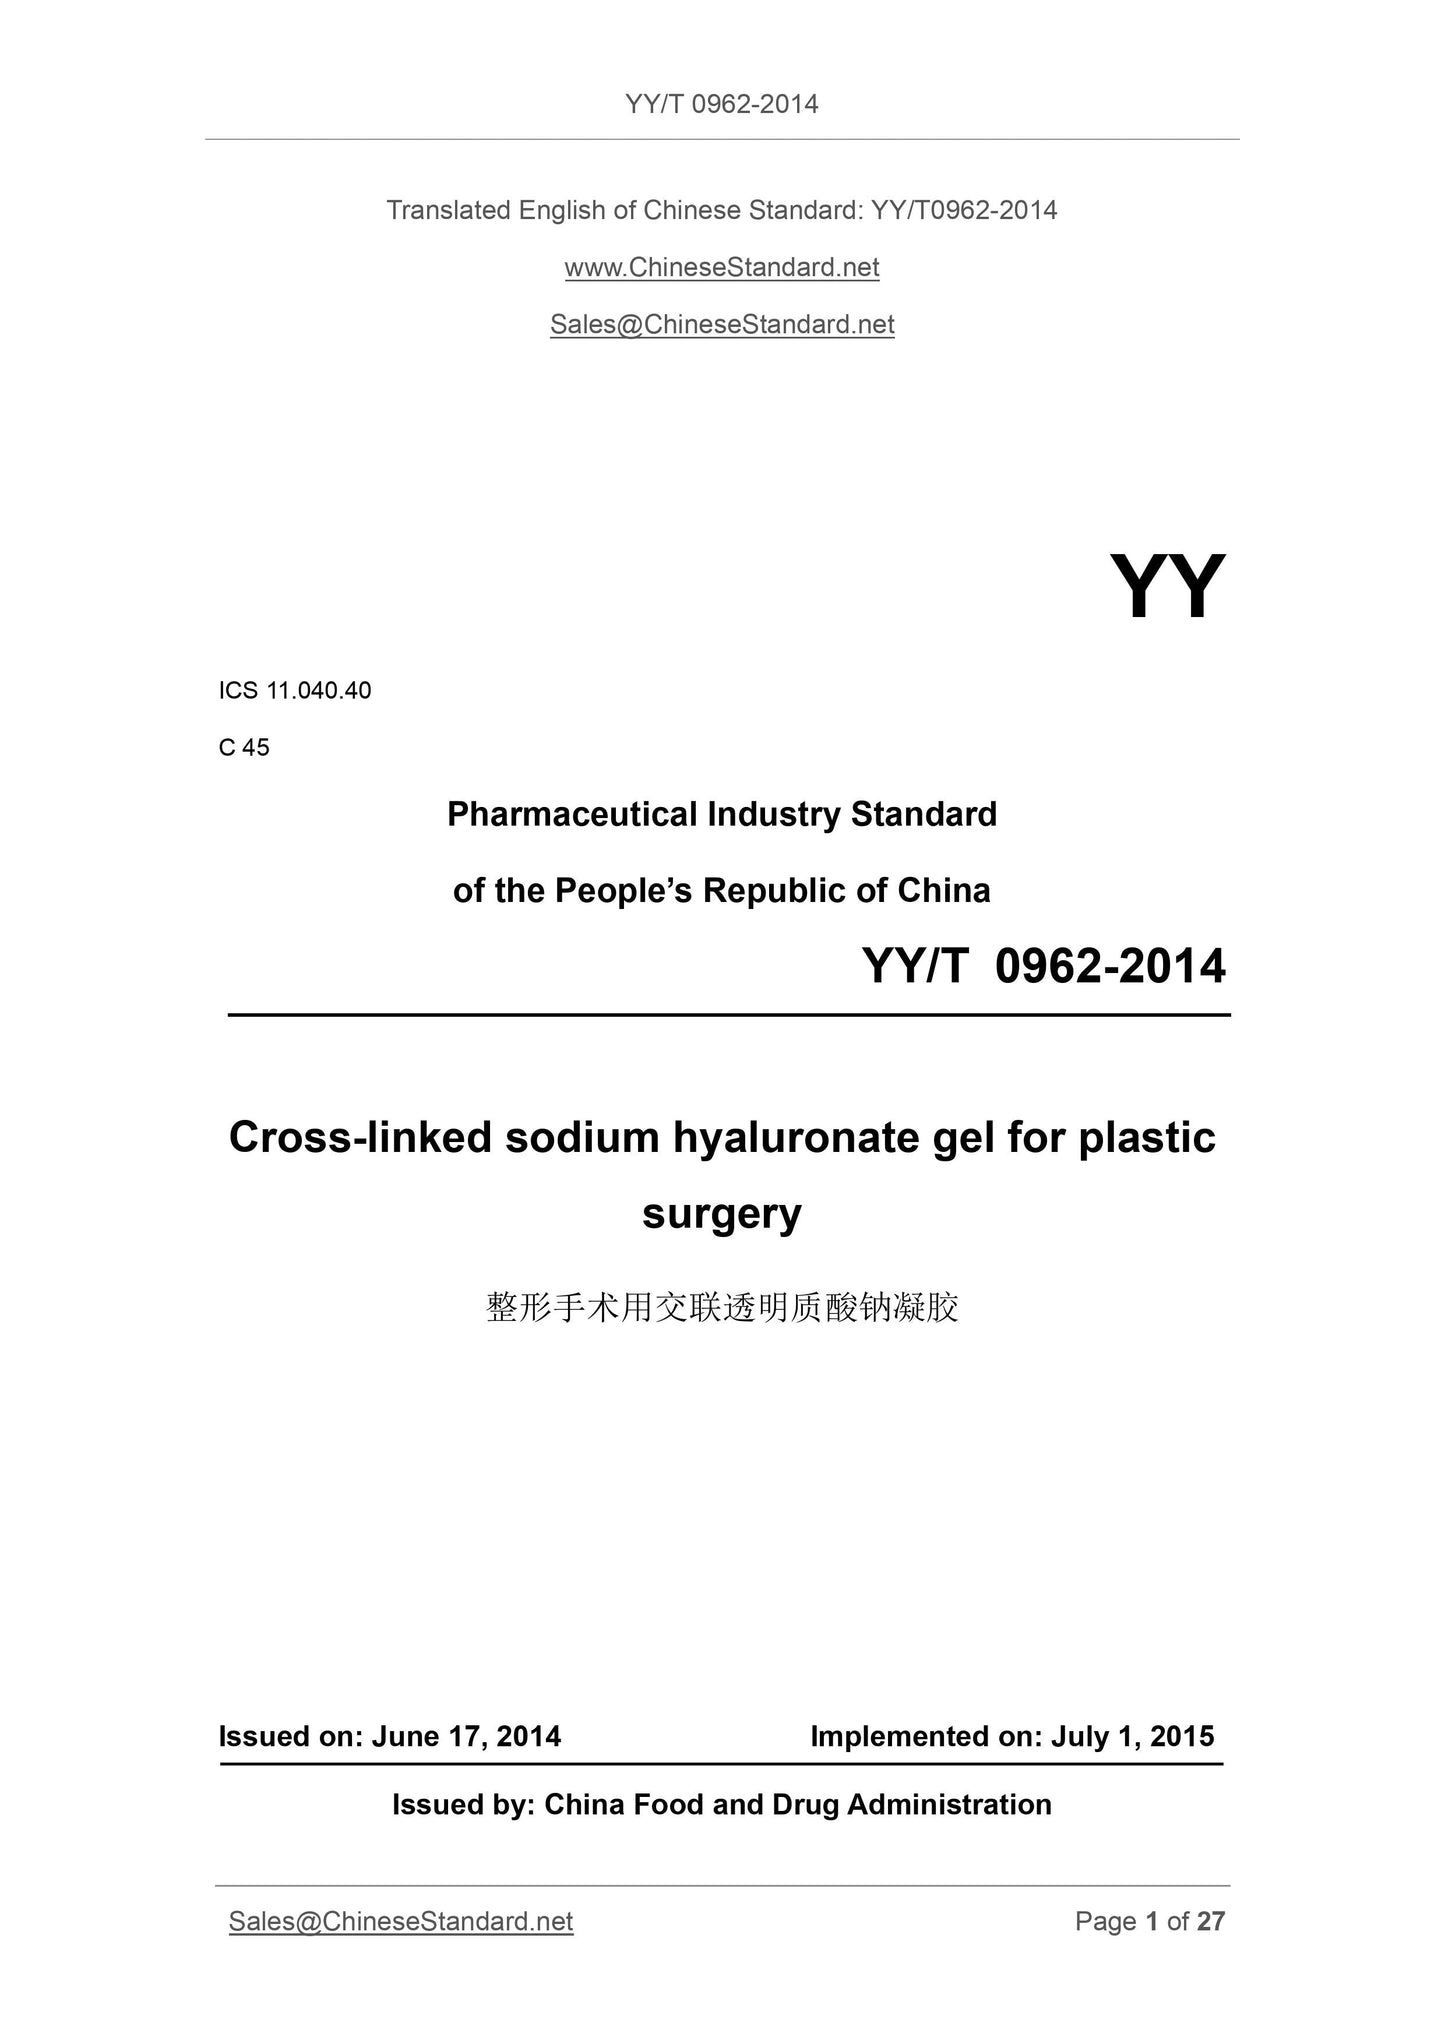 YY/T 0962-2014 Page 1